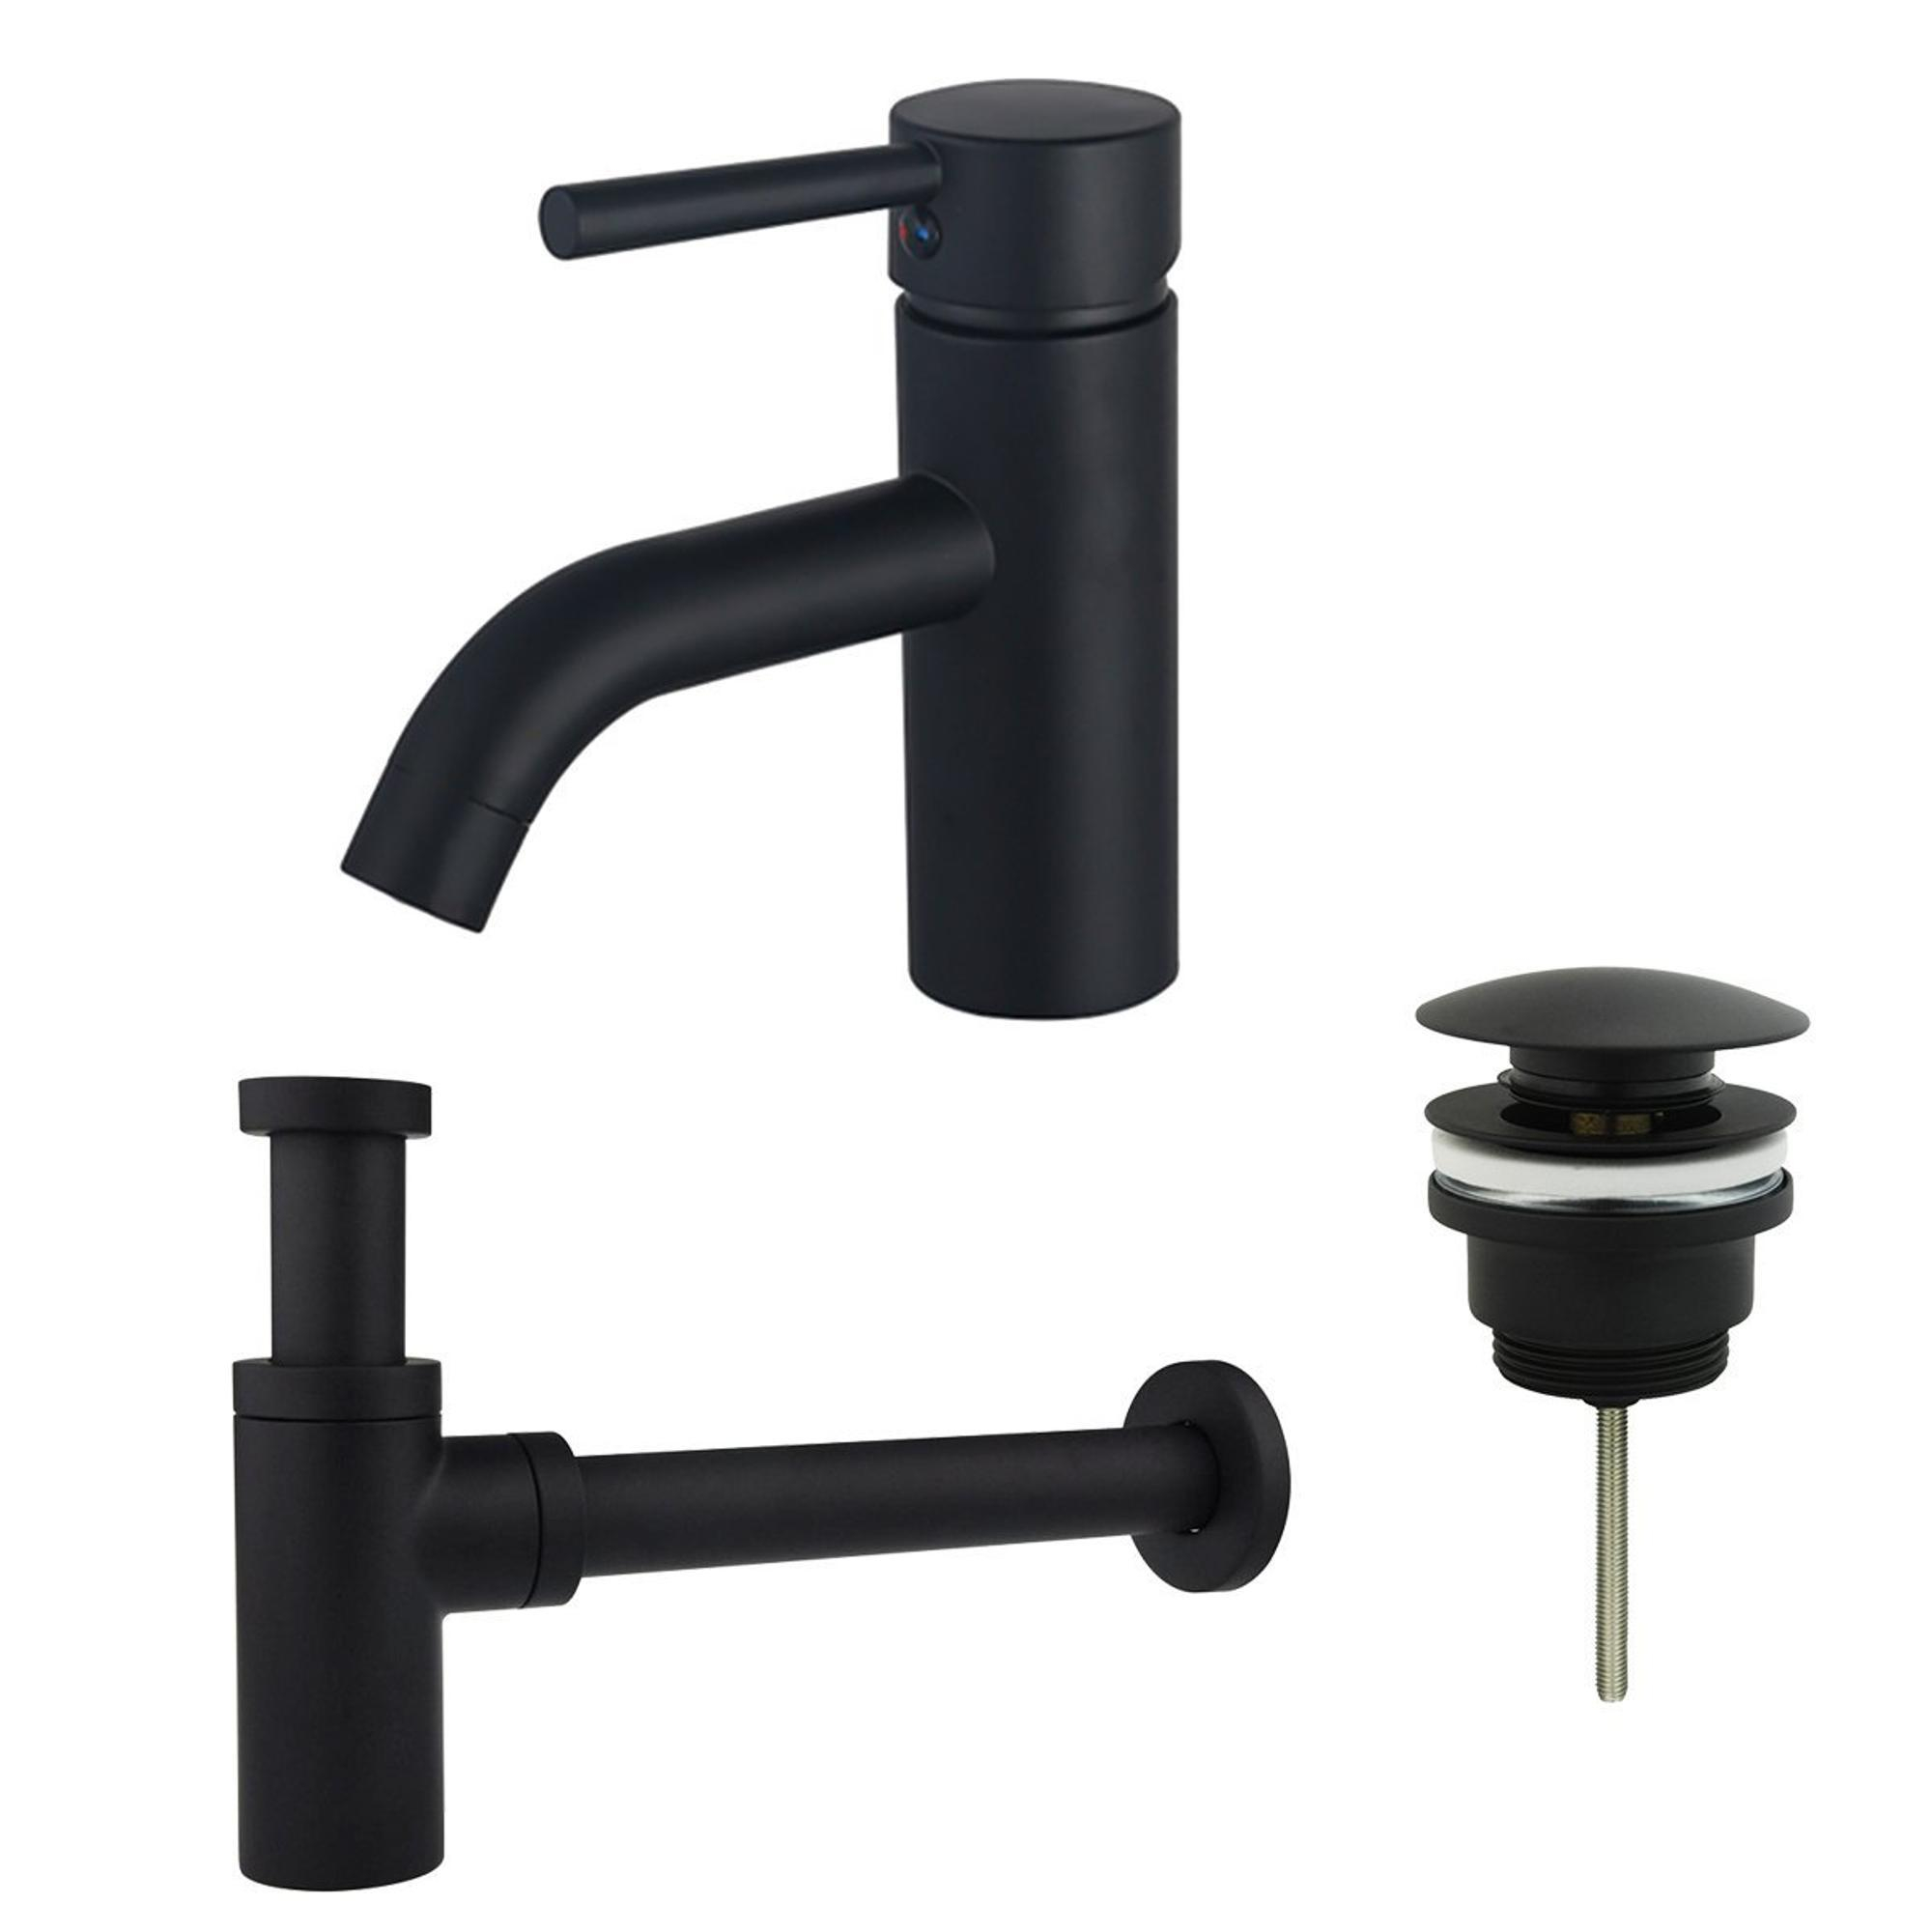 https://static.rorix.nl/image/product/overig/2000x2000/314f3d1e3267e71cd47b6a8149ad3aff.jpg/fortifura-calvi-kit-mitigeur-lavabo-robinet-bas-bonde-clic-clac-siphon-design-noir-mat-sw915262.jpg